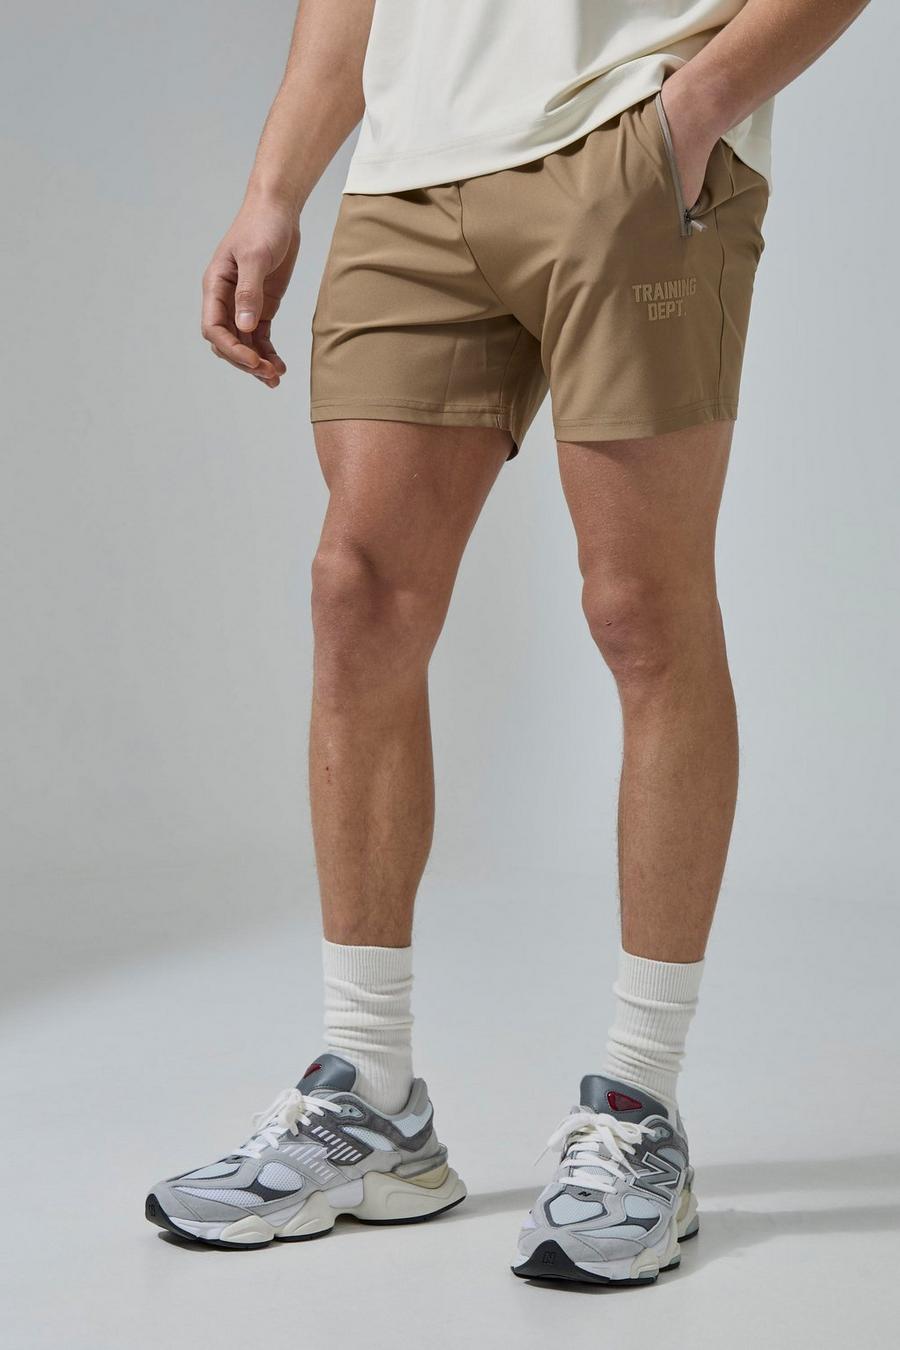 Pantaloncini Active Training Dept da 12 cm, Brown